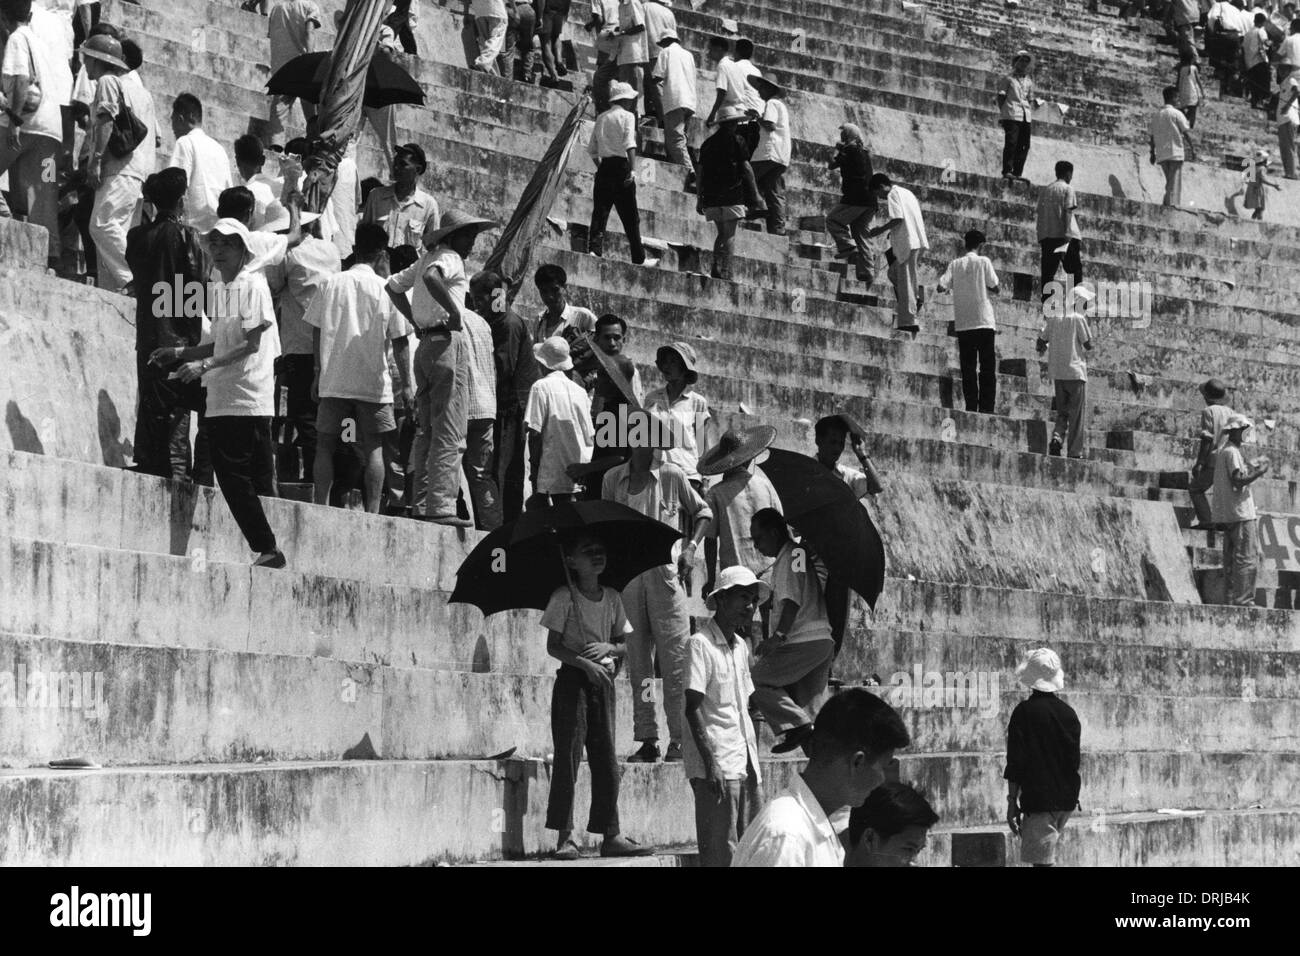 Dispersing crowd, Canton stadium, China Stock Photo